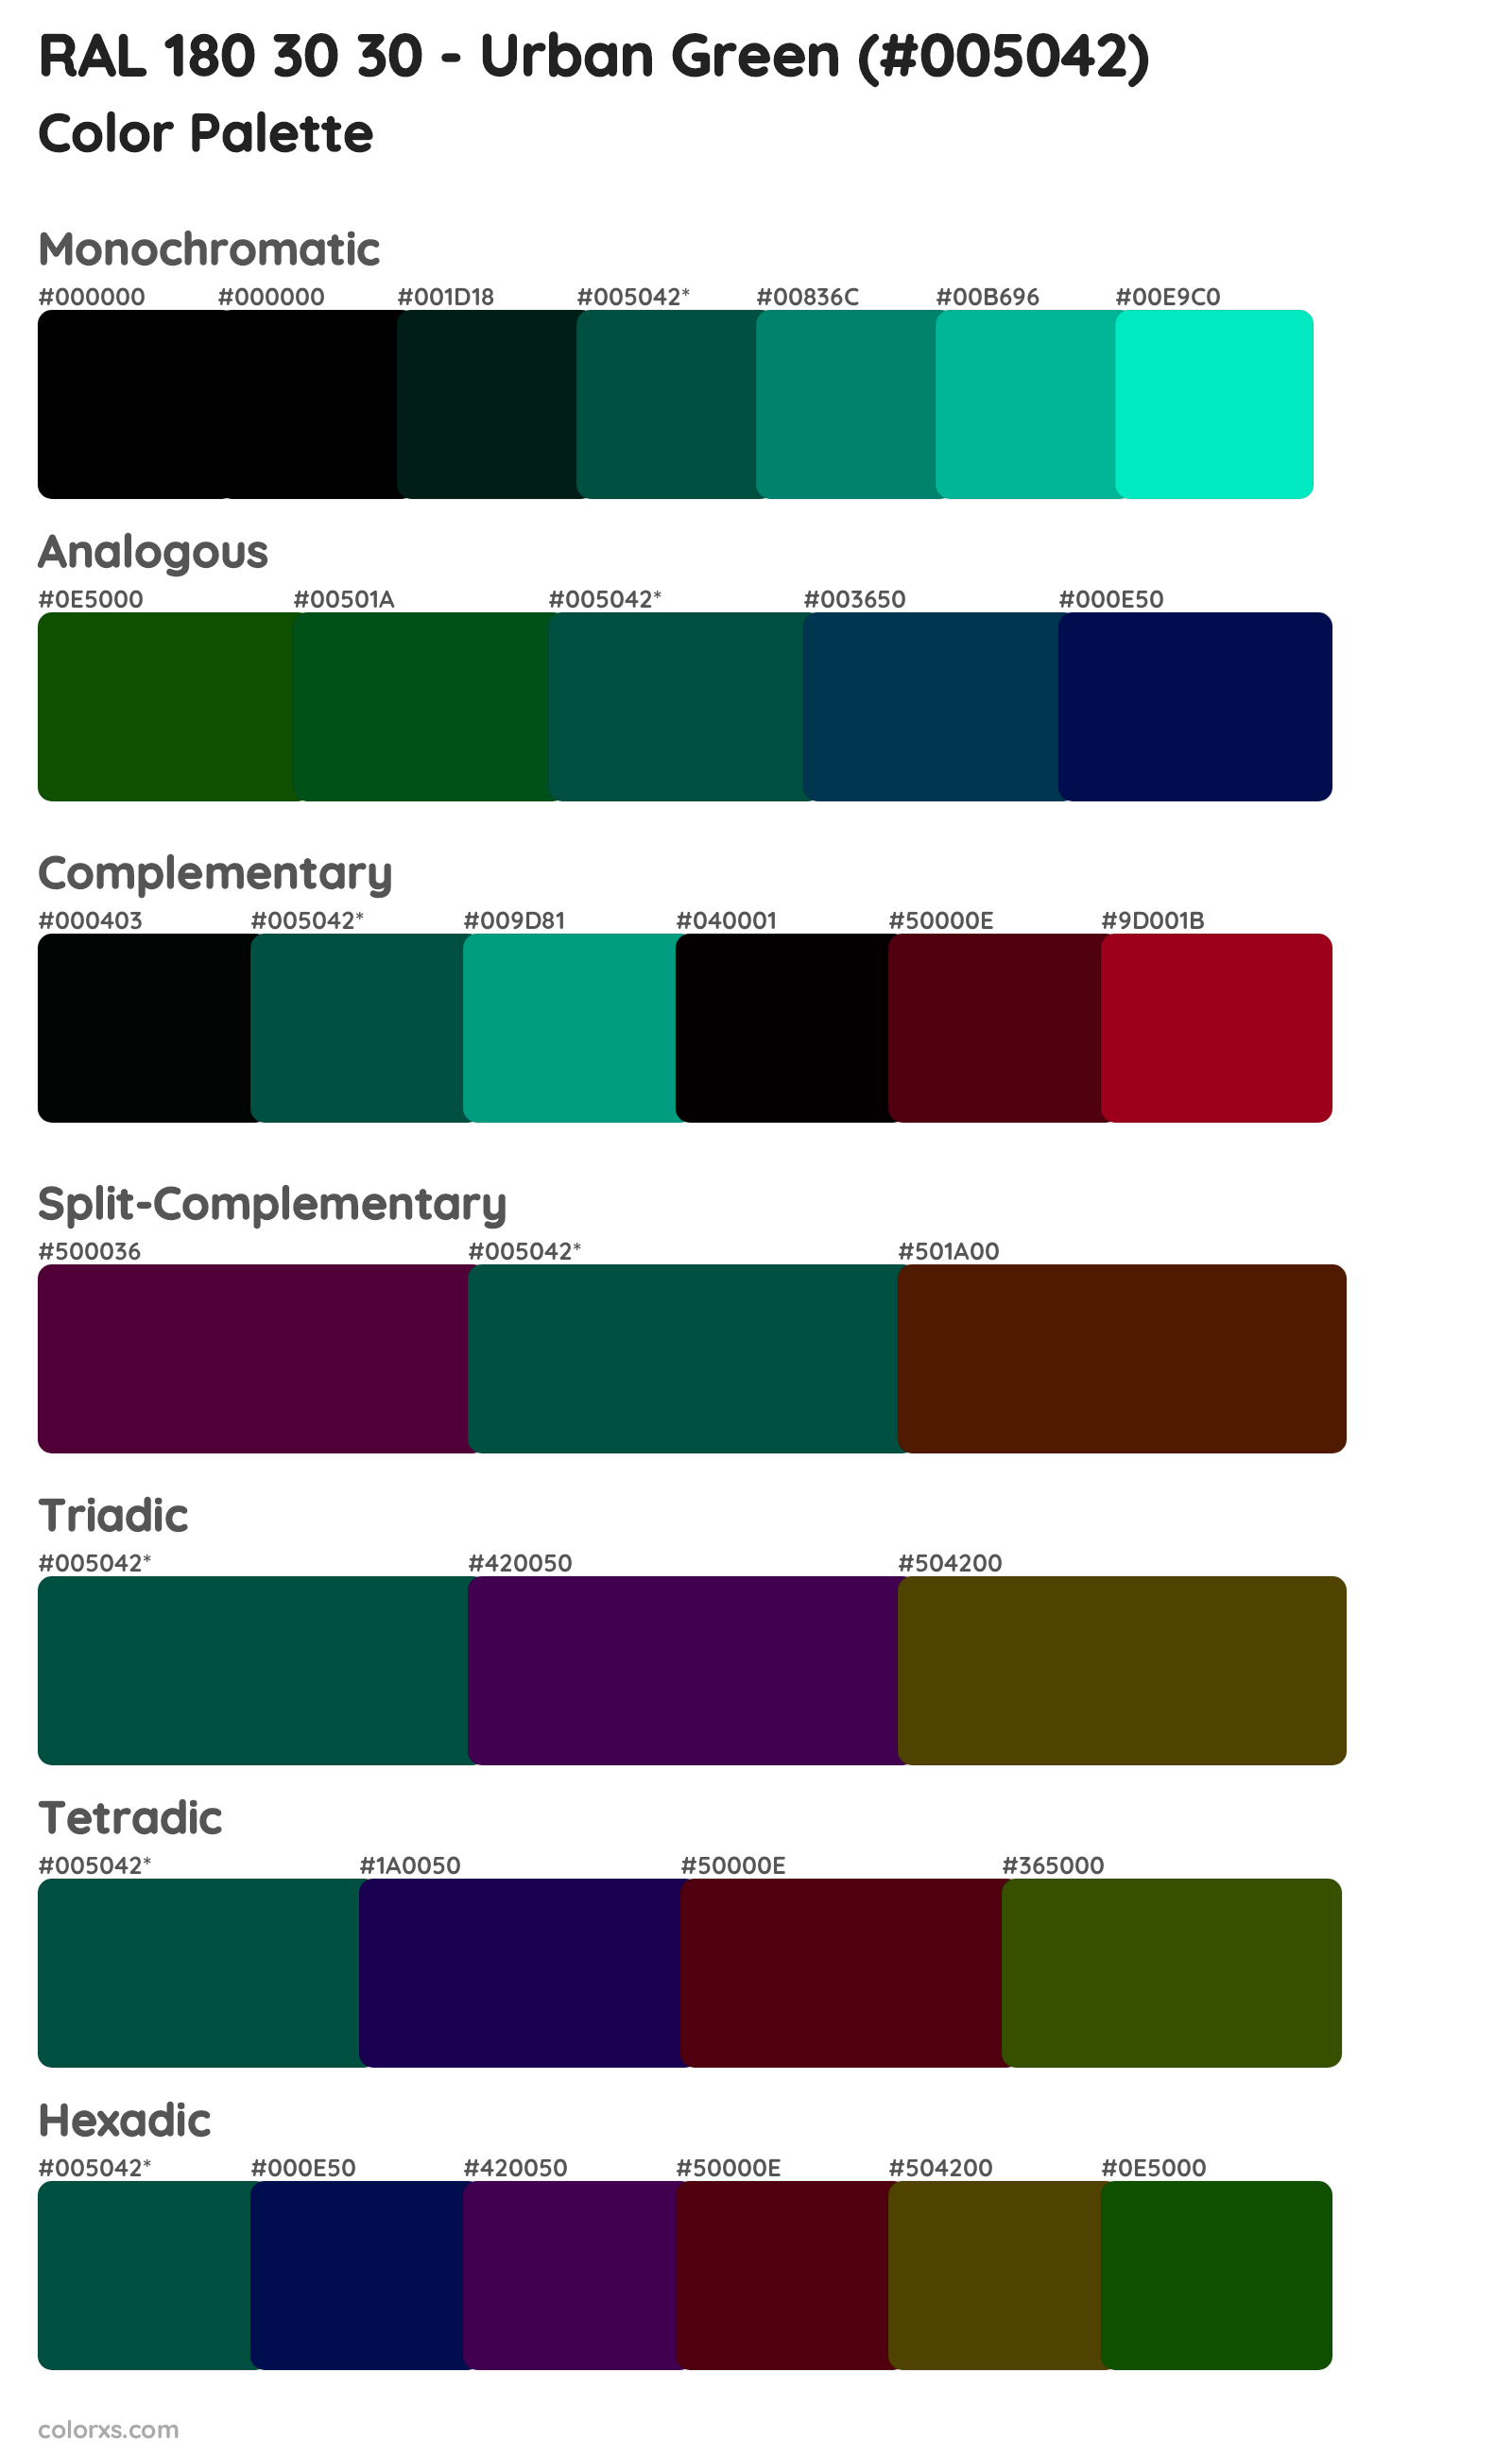 RAL 180 30 30 - Urban Green Color Scheme Palettes